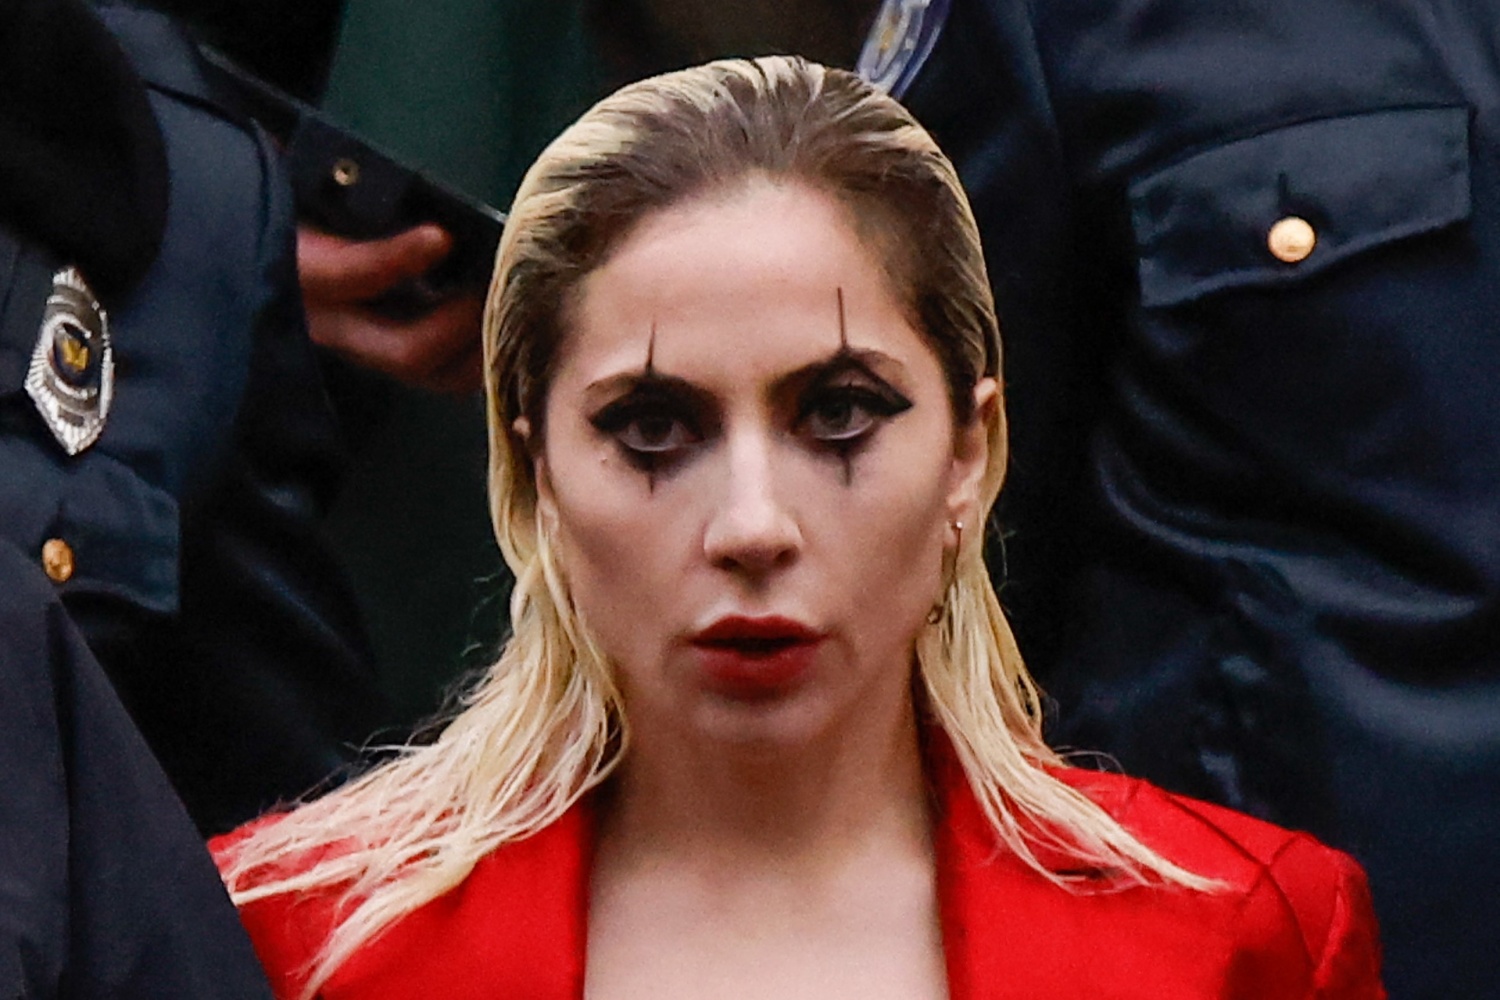 Lady Gaga Will Be Singing Cover Songs in 'Joker 2'